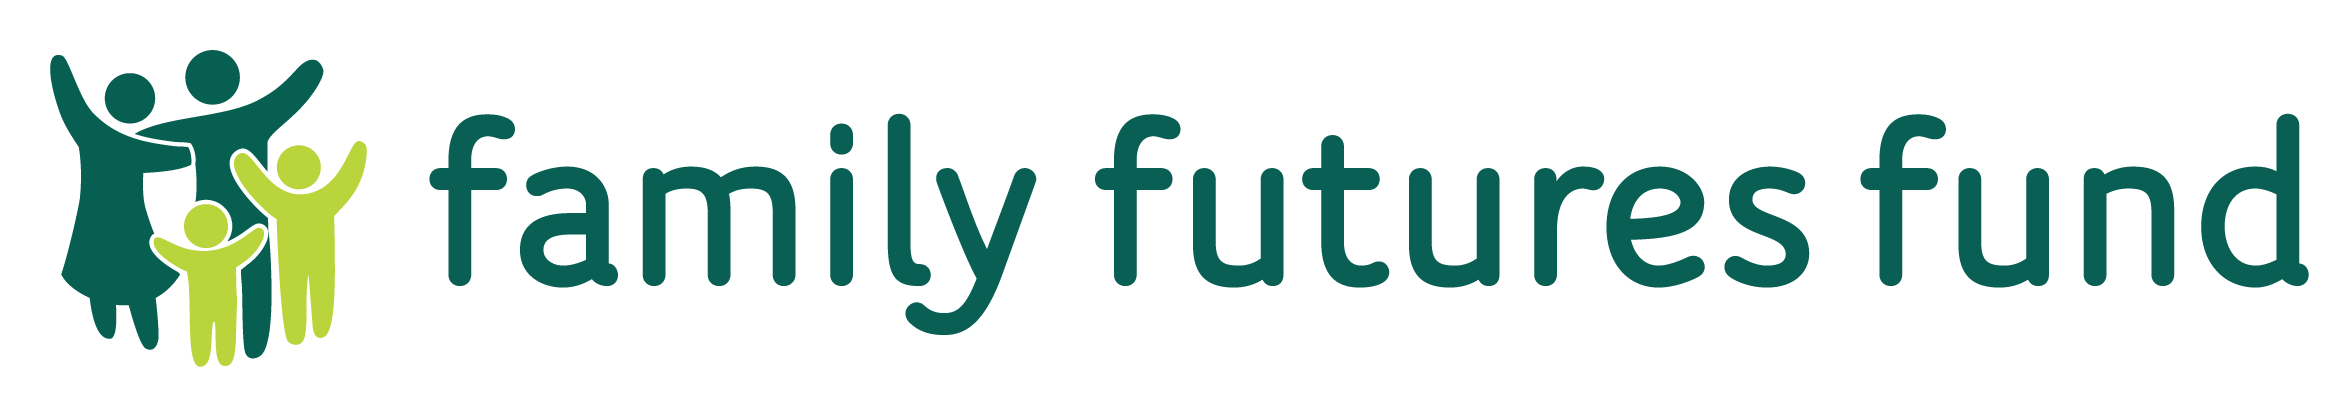 Family Future Club Logo Color